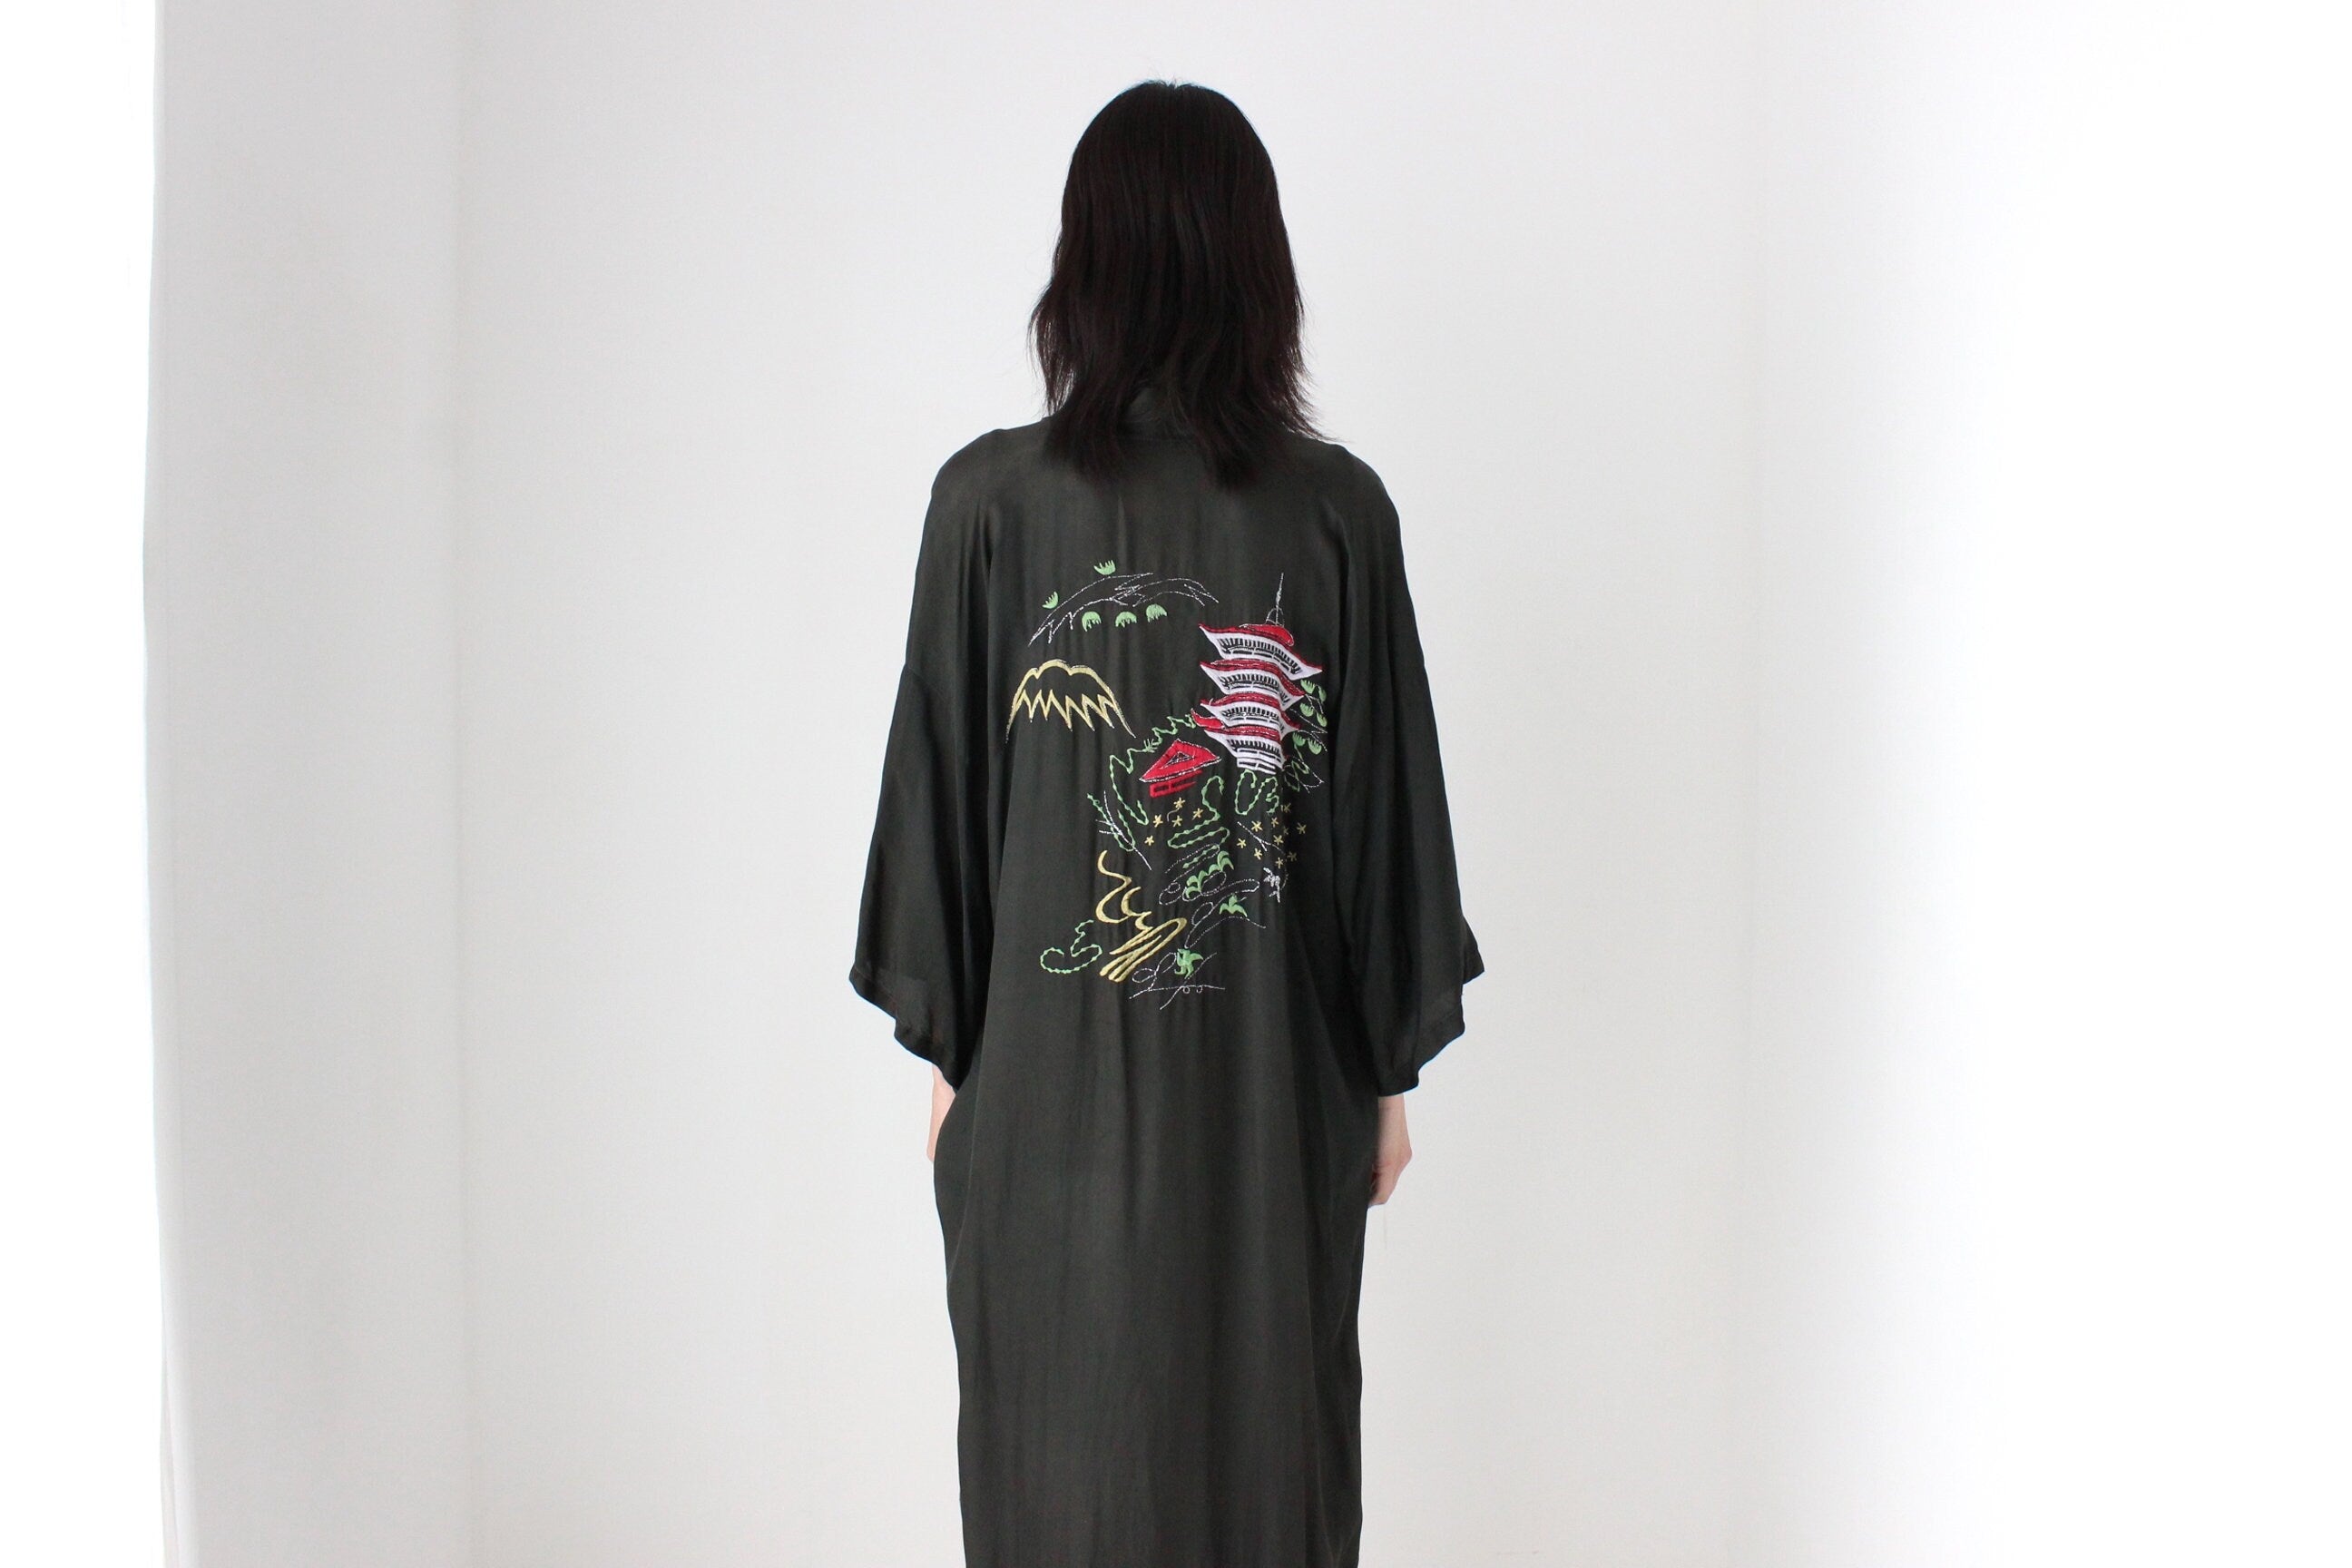 1980s Silky Rayon Button Front Kimono Robe Dress